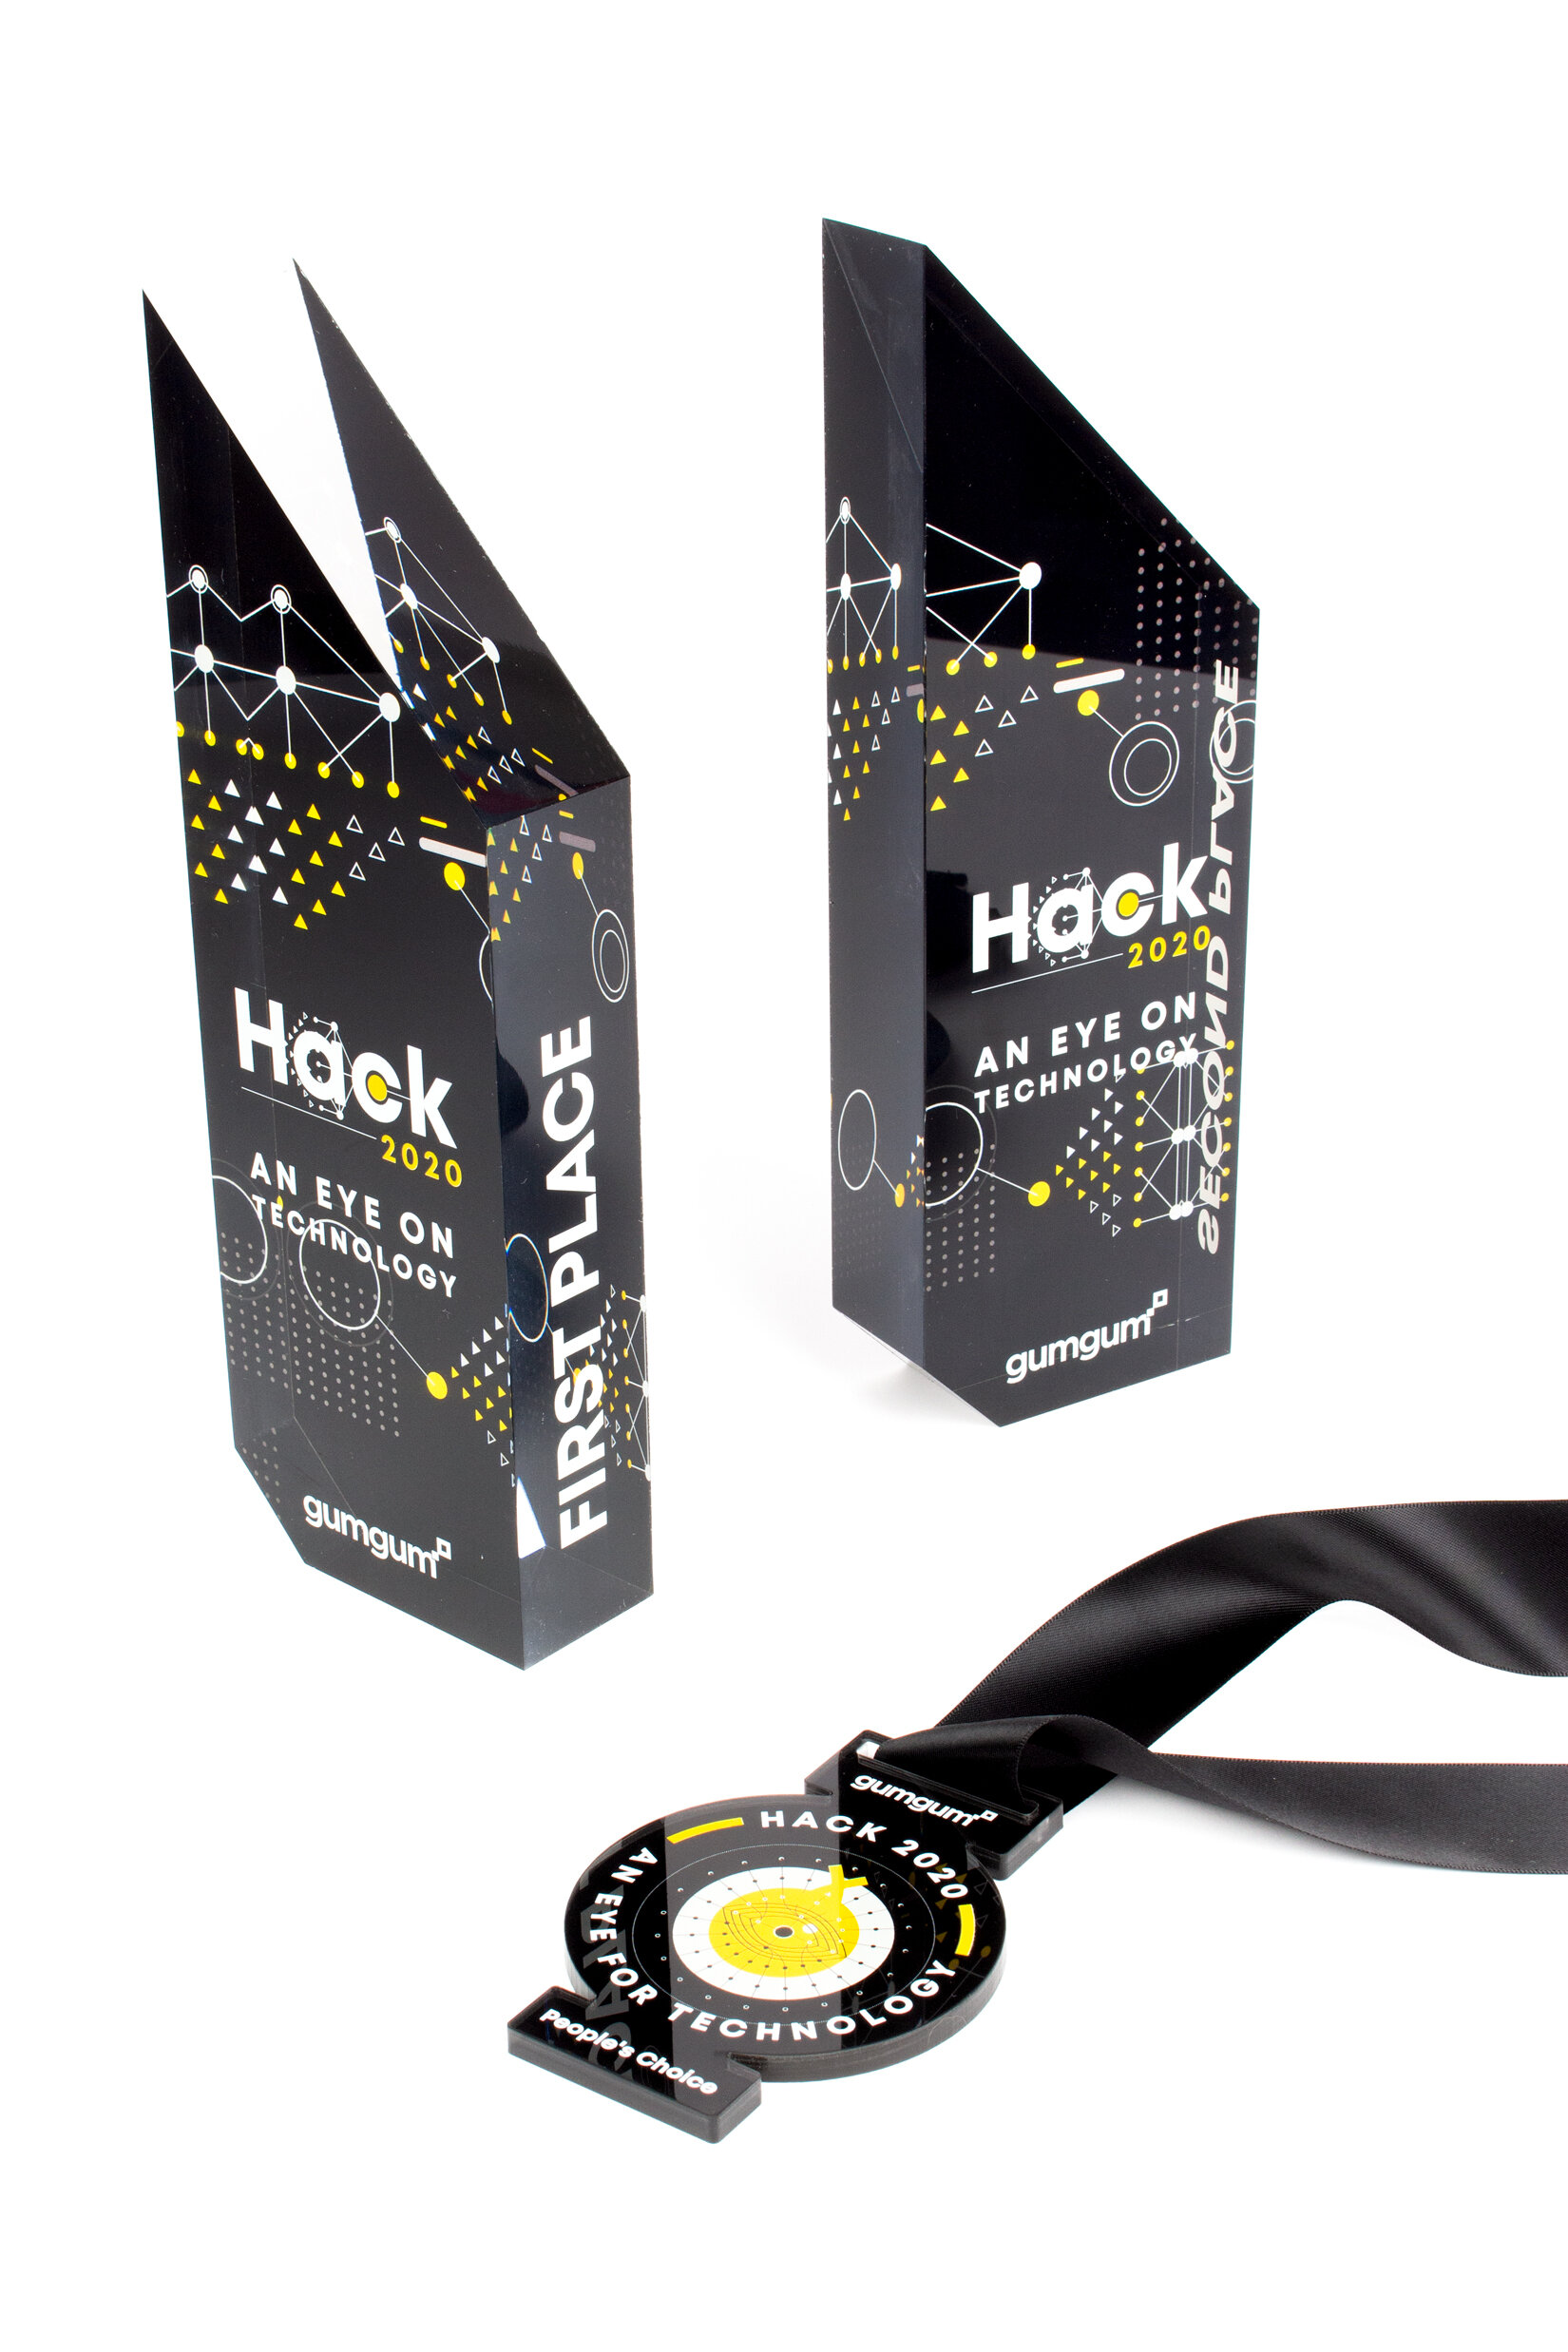 GumGum Hackathon 2020 an eye for technology medals 5